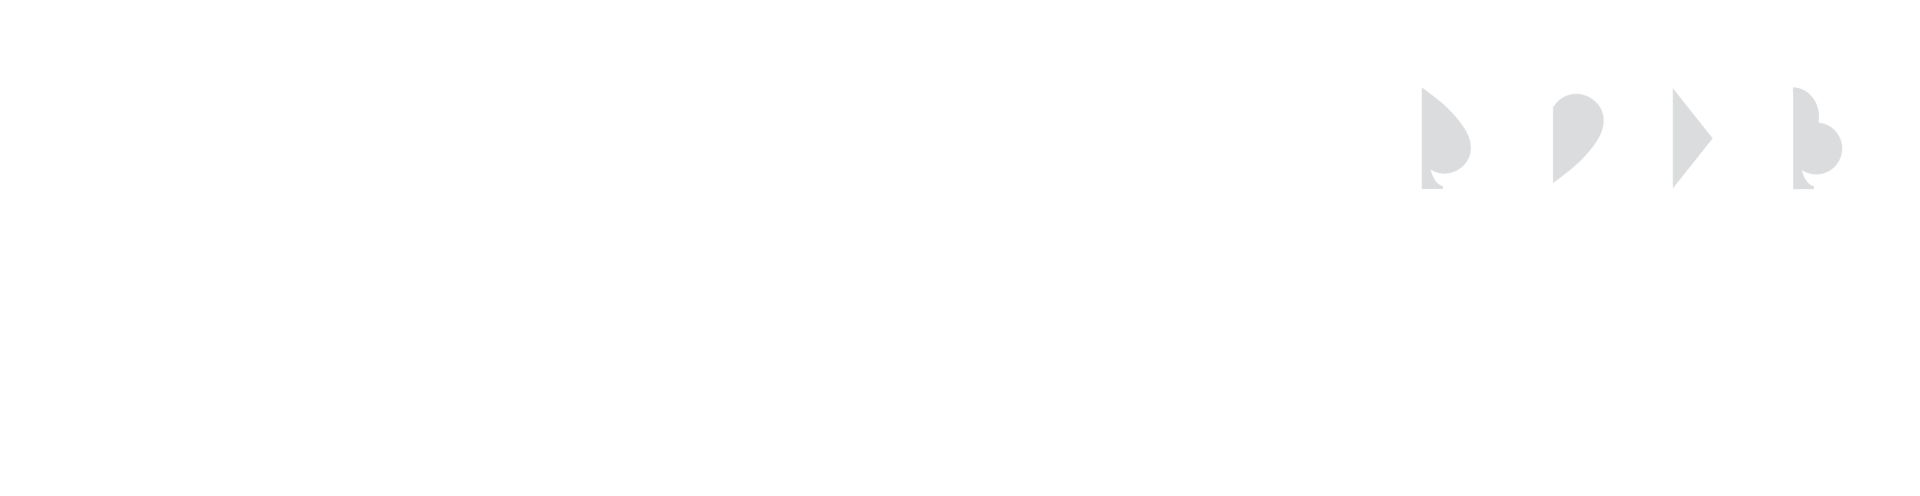 christchurch bridge club logo white